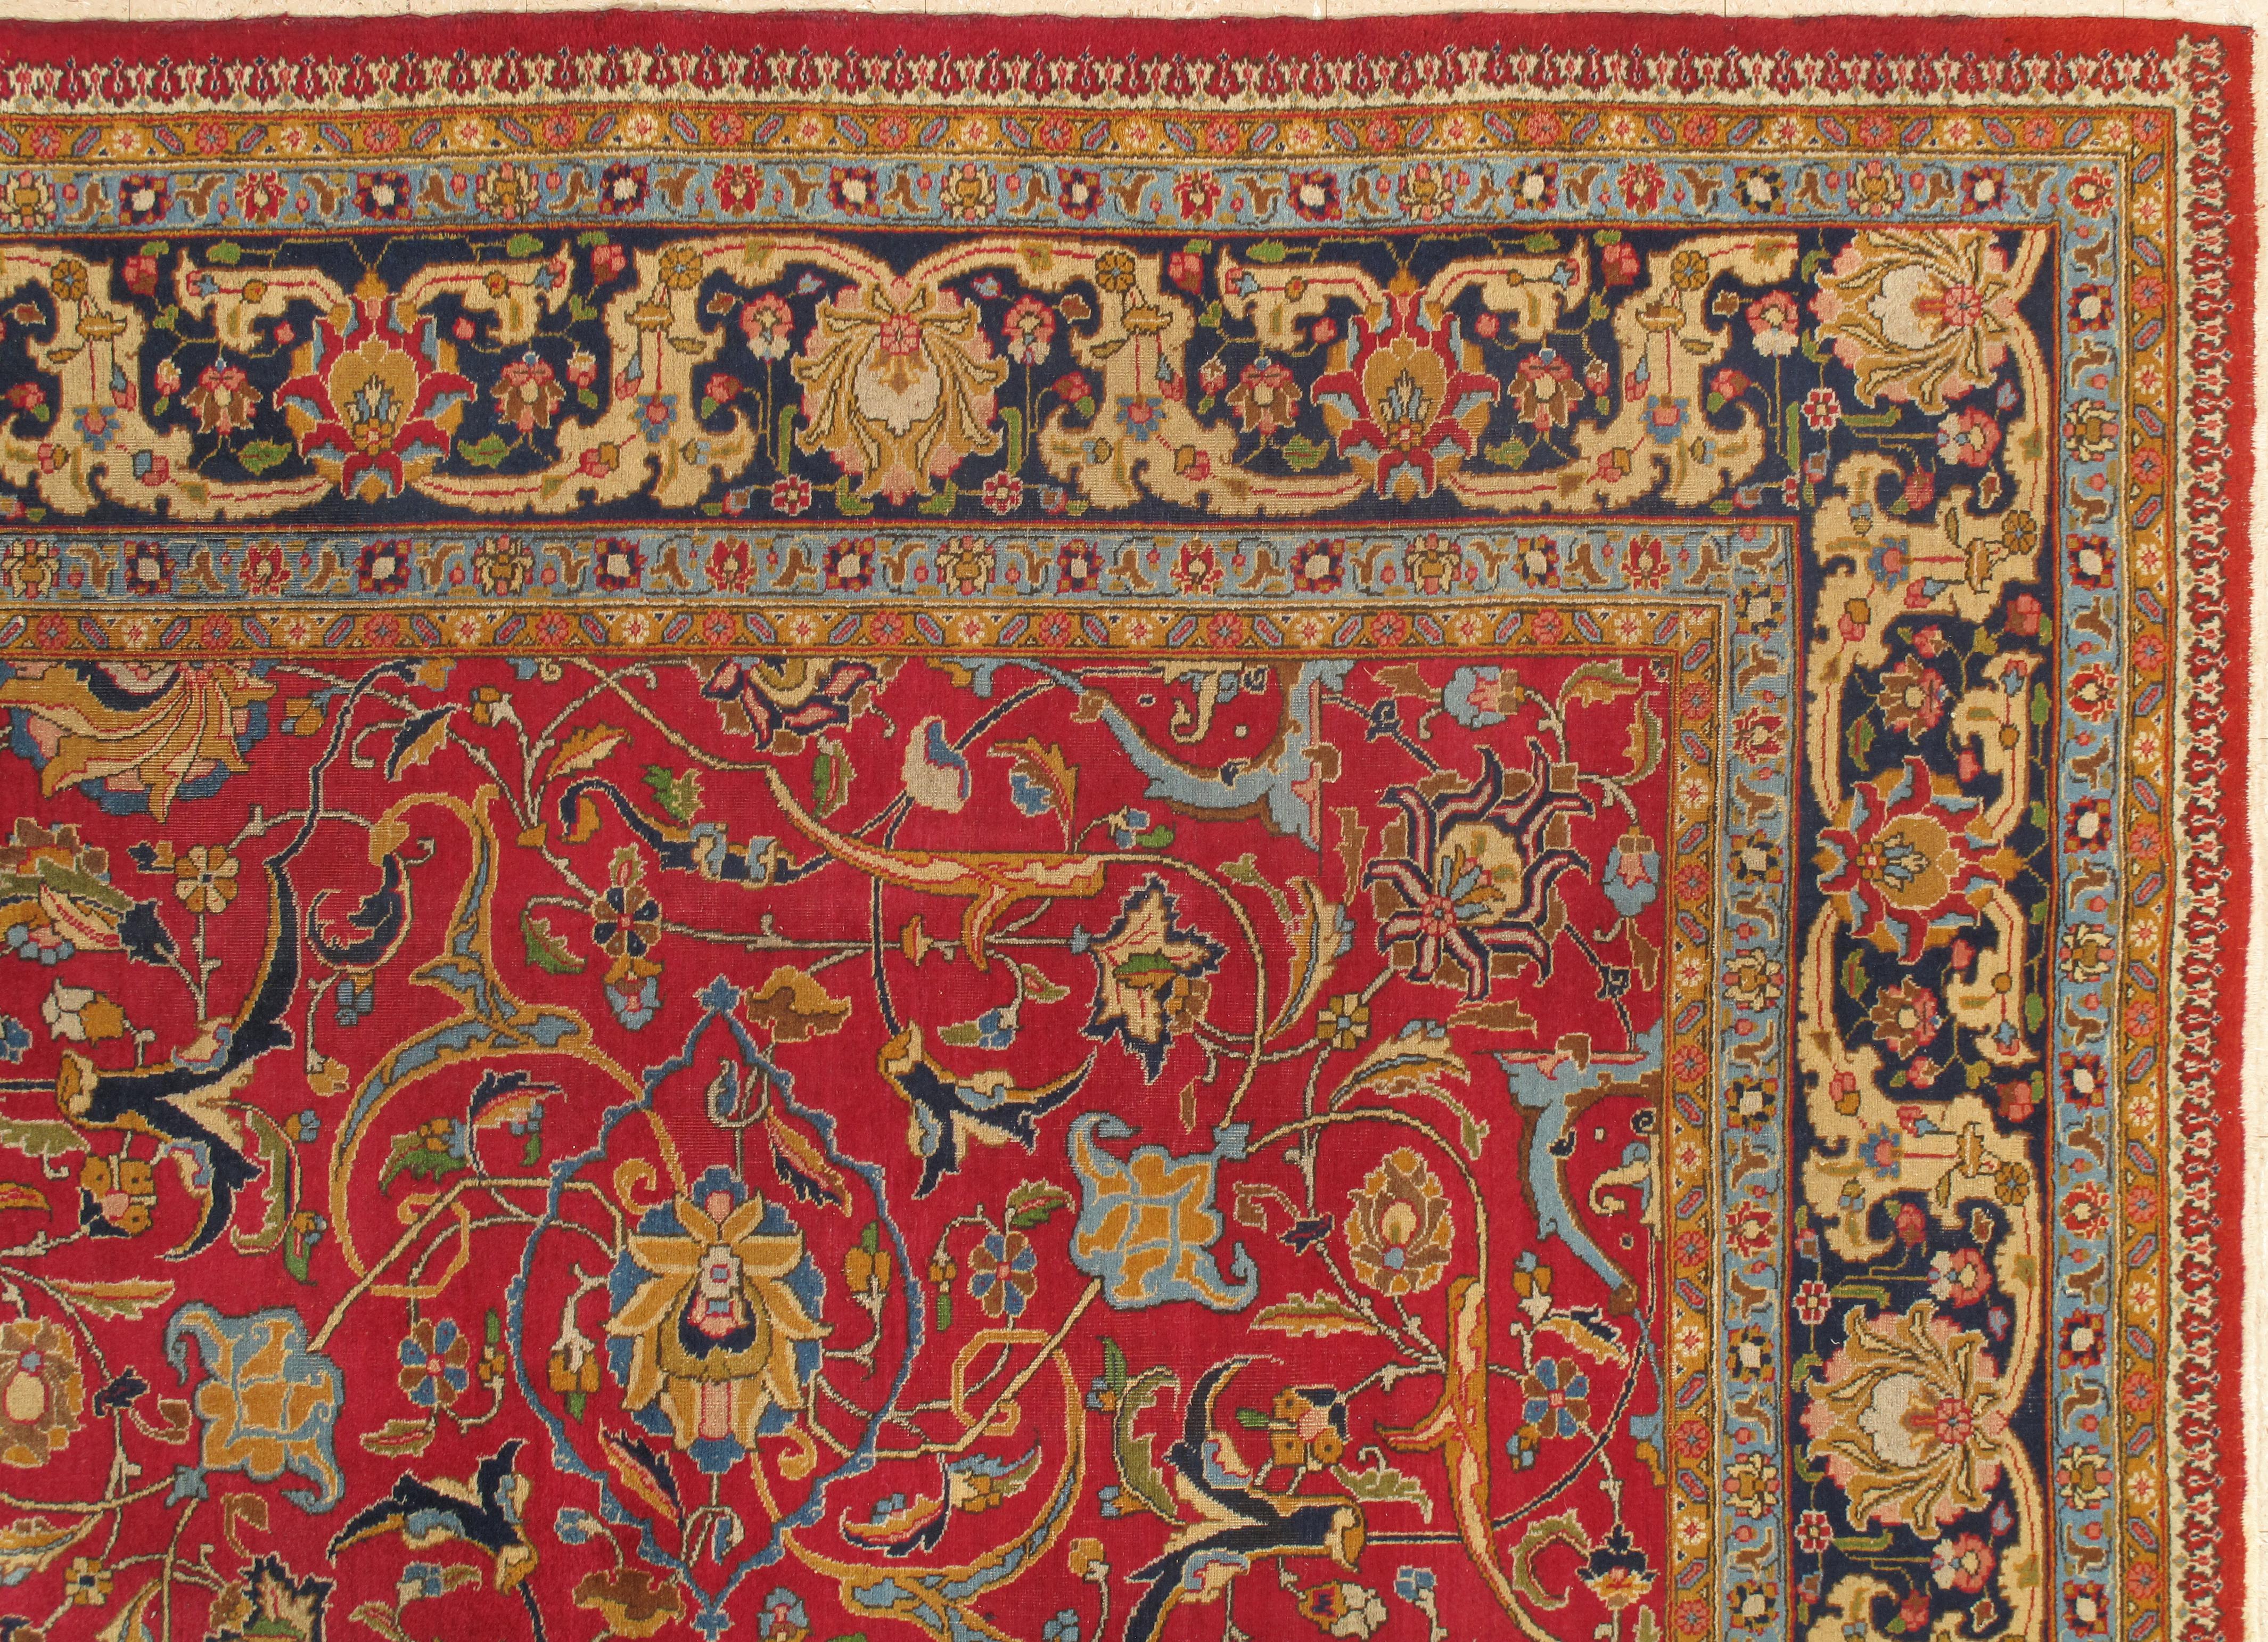 Hand-Knotted Antique Tabriz Persian Carpet, Handmade Oriental Rug, Red, Caramel, Light Blue